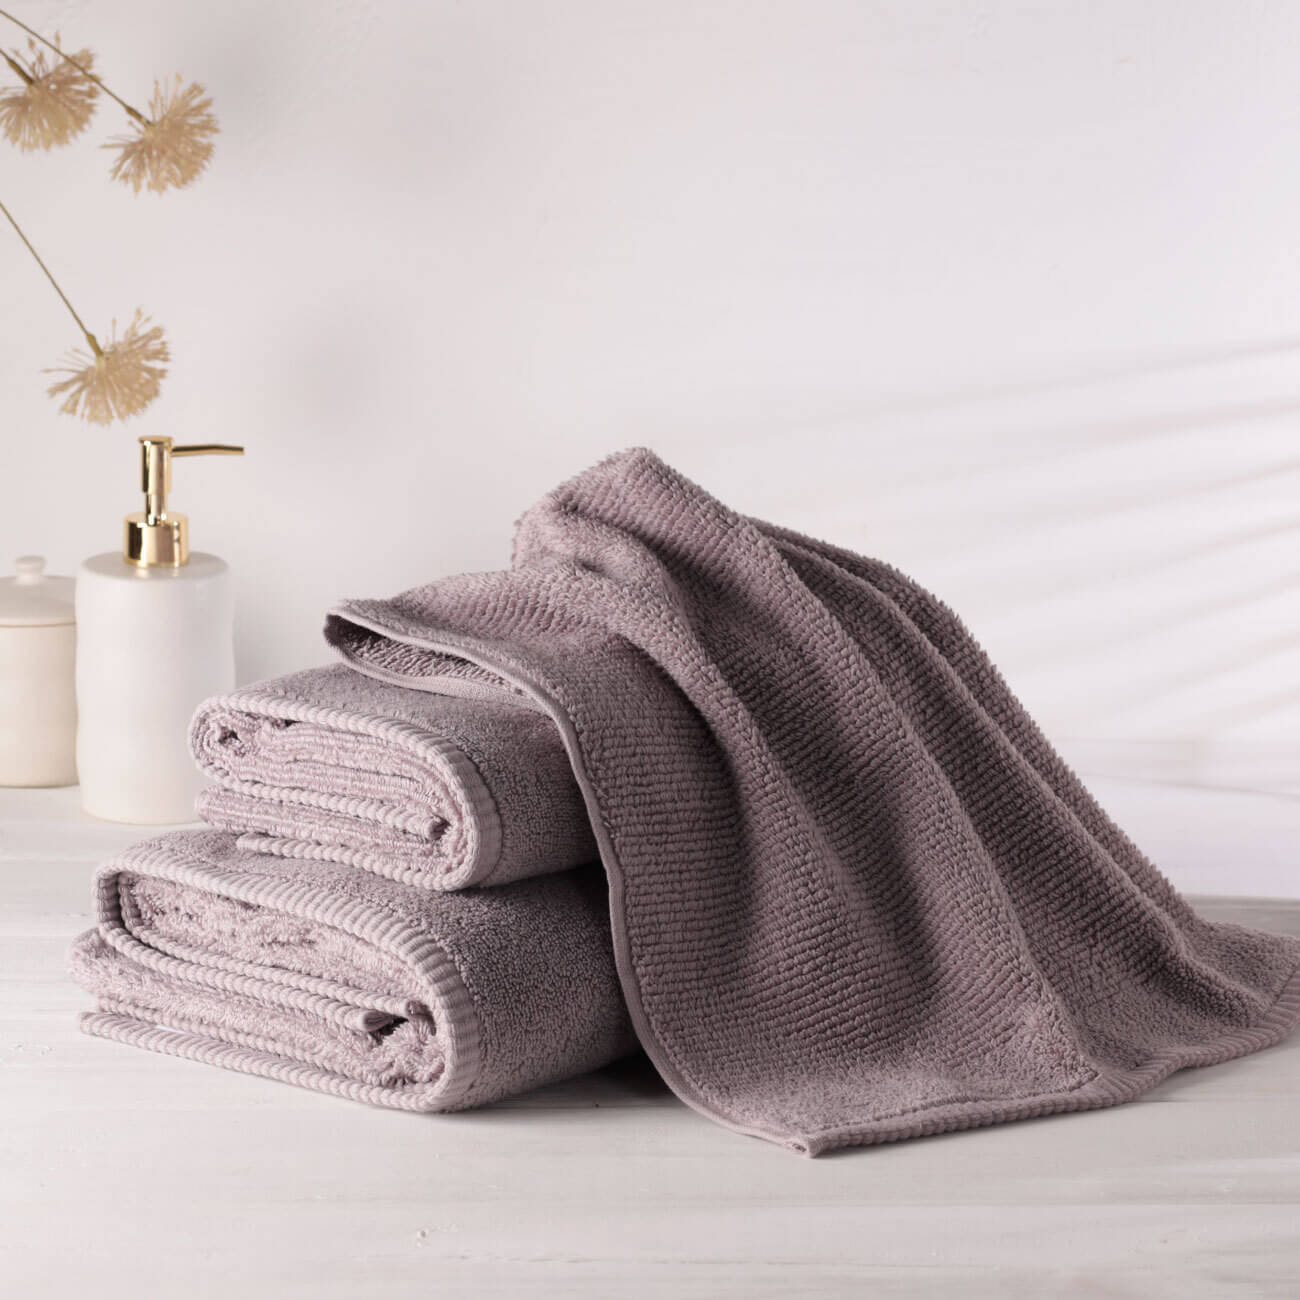 Полотенце, 40х60 см, хлопок, лиловое, Terry cotton набор для полотенце уголок рукавица